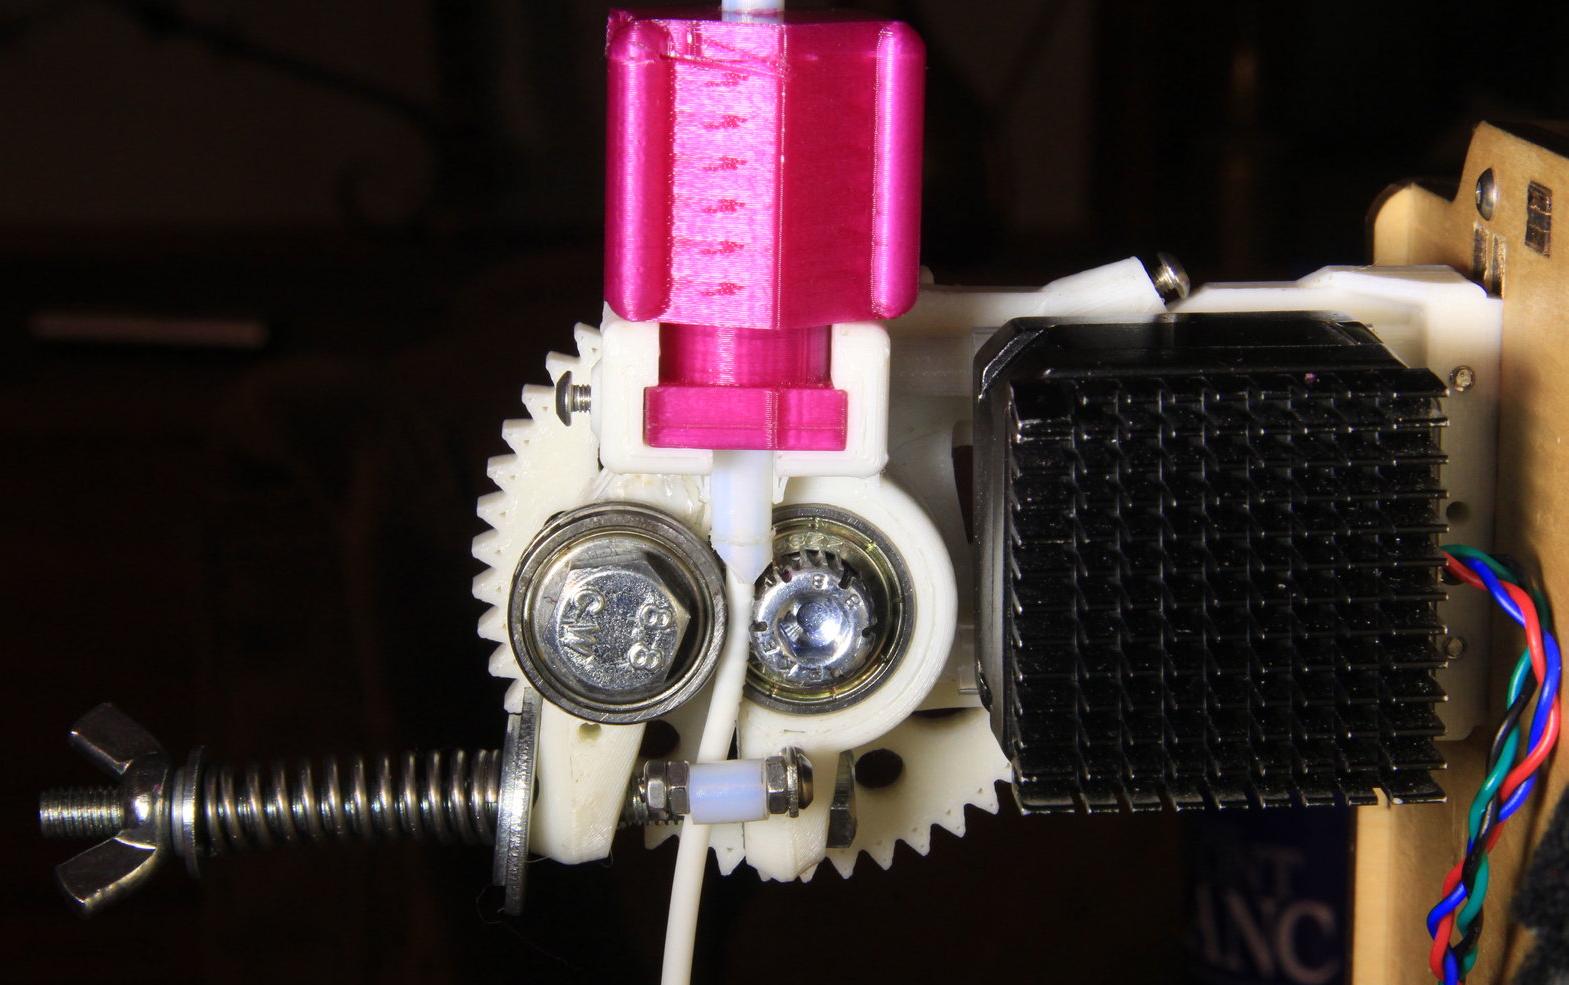 printer improvements: Rollerstruder: a filament feeder / driver / extruder